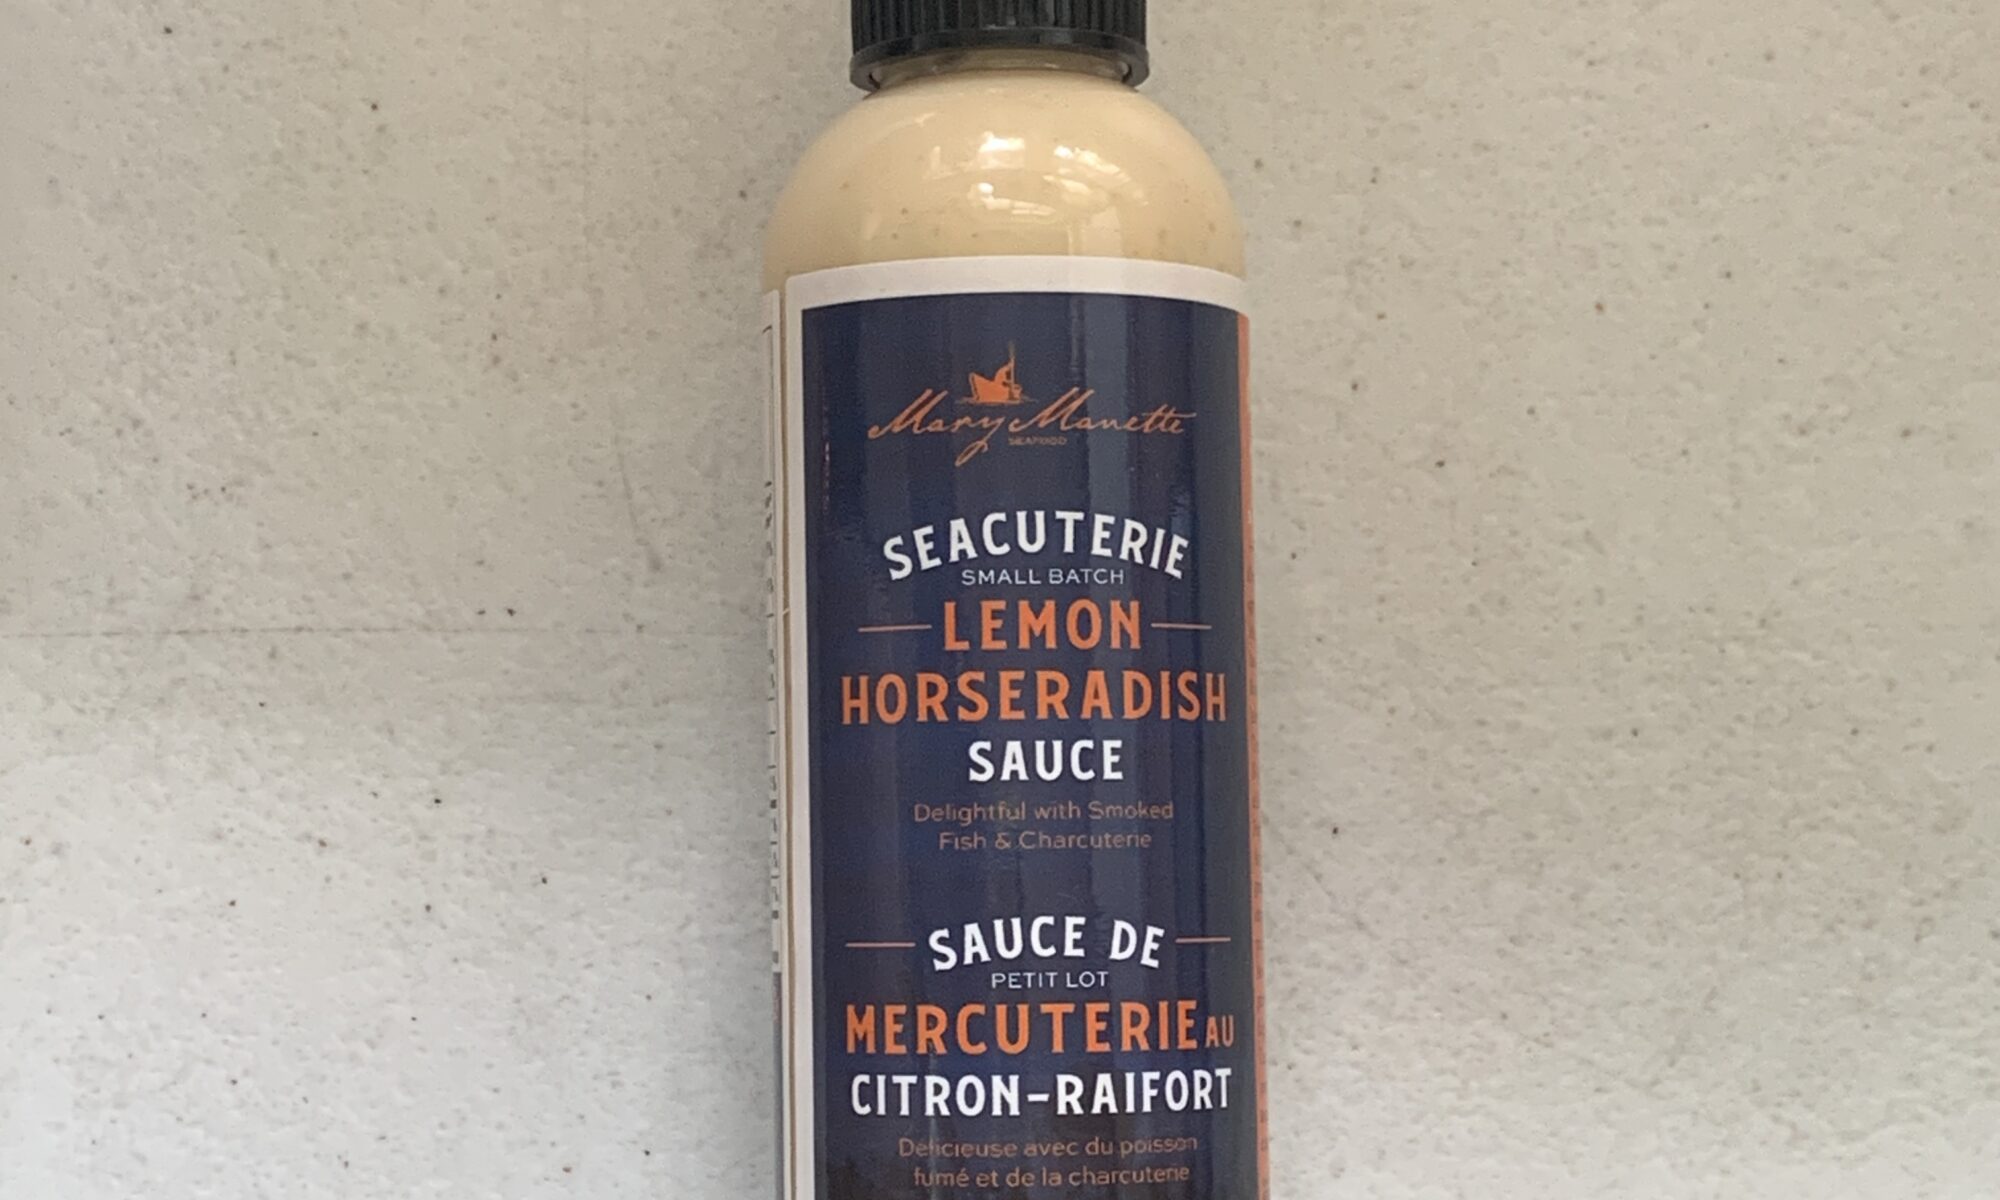 Image of the front of a bottle of Mary Manette Seacuterie Lemon Horseradish Sauce